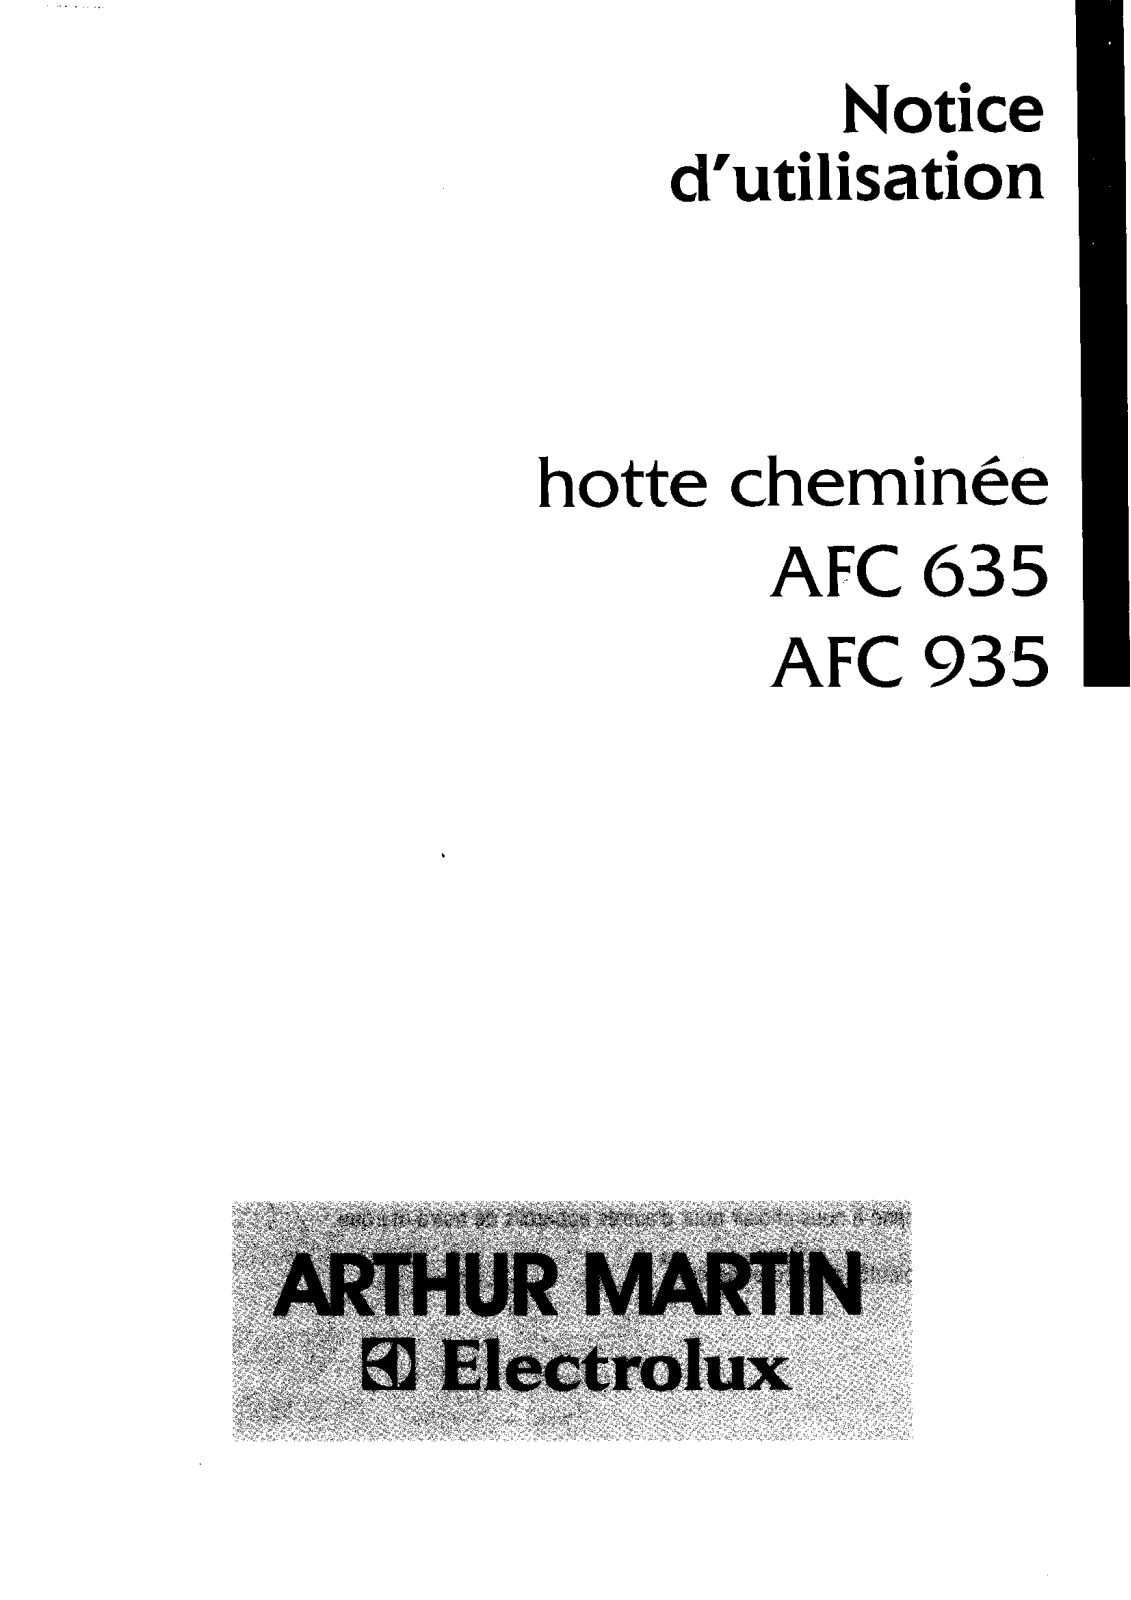 Arthur martin AFC635, AFC935 User Manual